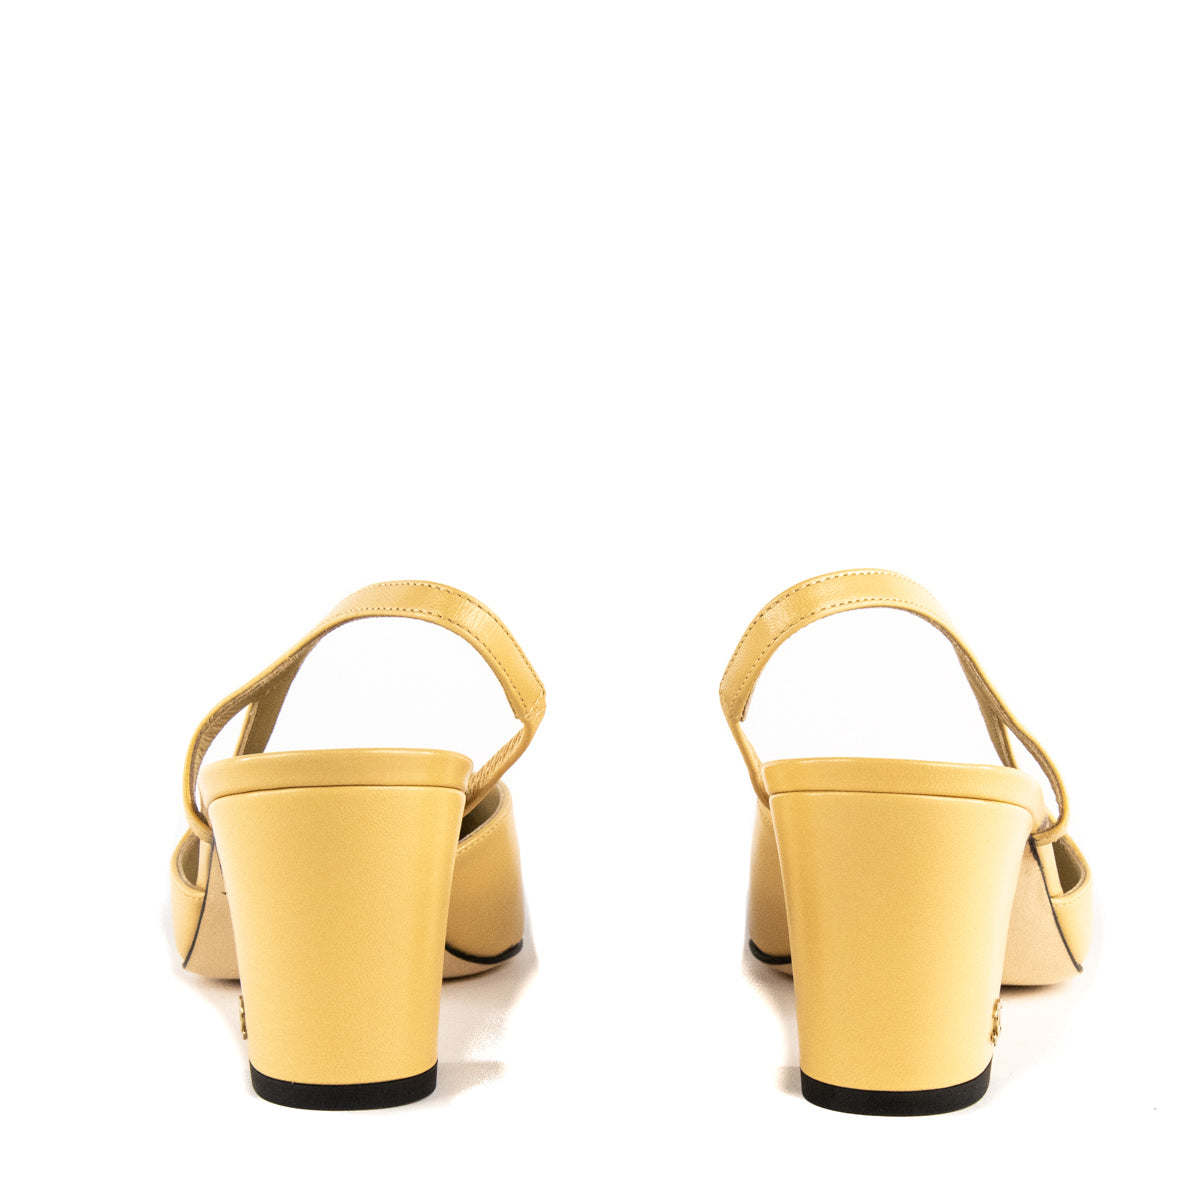 Chanel Beige & Black Grosgrain Cap Toe Slingback Pumps Size US 8.5 | EU 38.5 - Love that Bag etc - Preowned Authentic Designer Handbags & Preloved Fashions